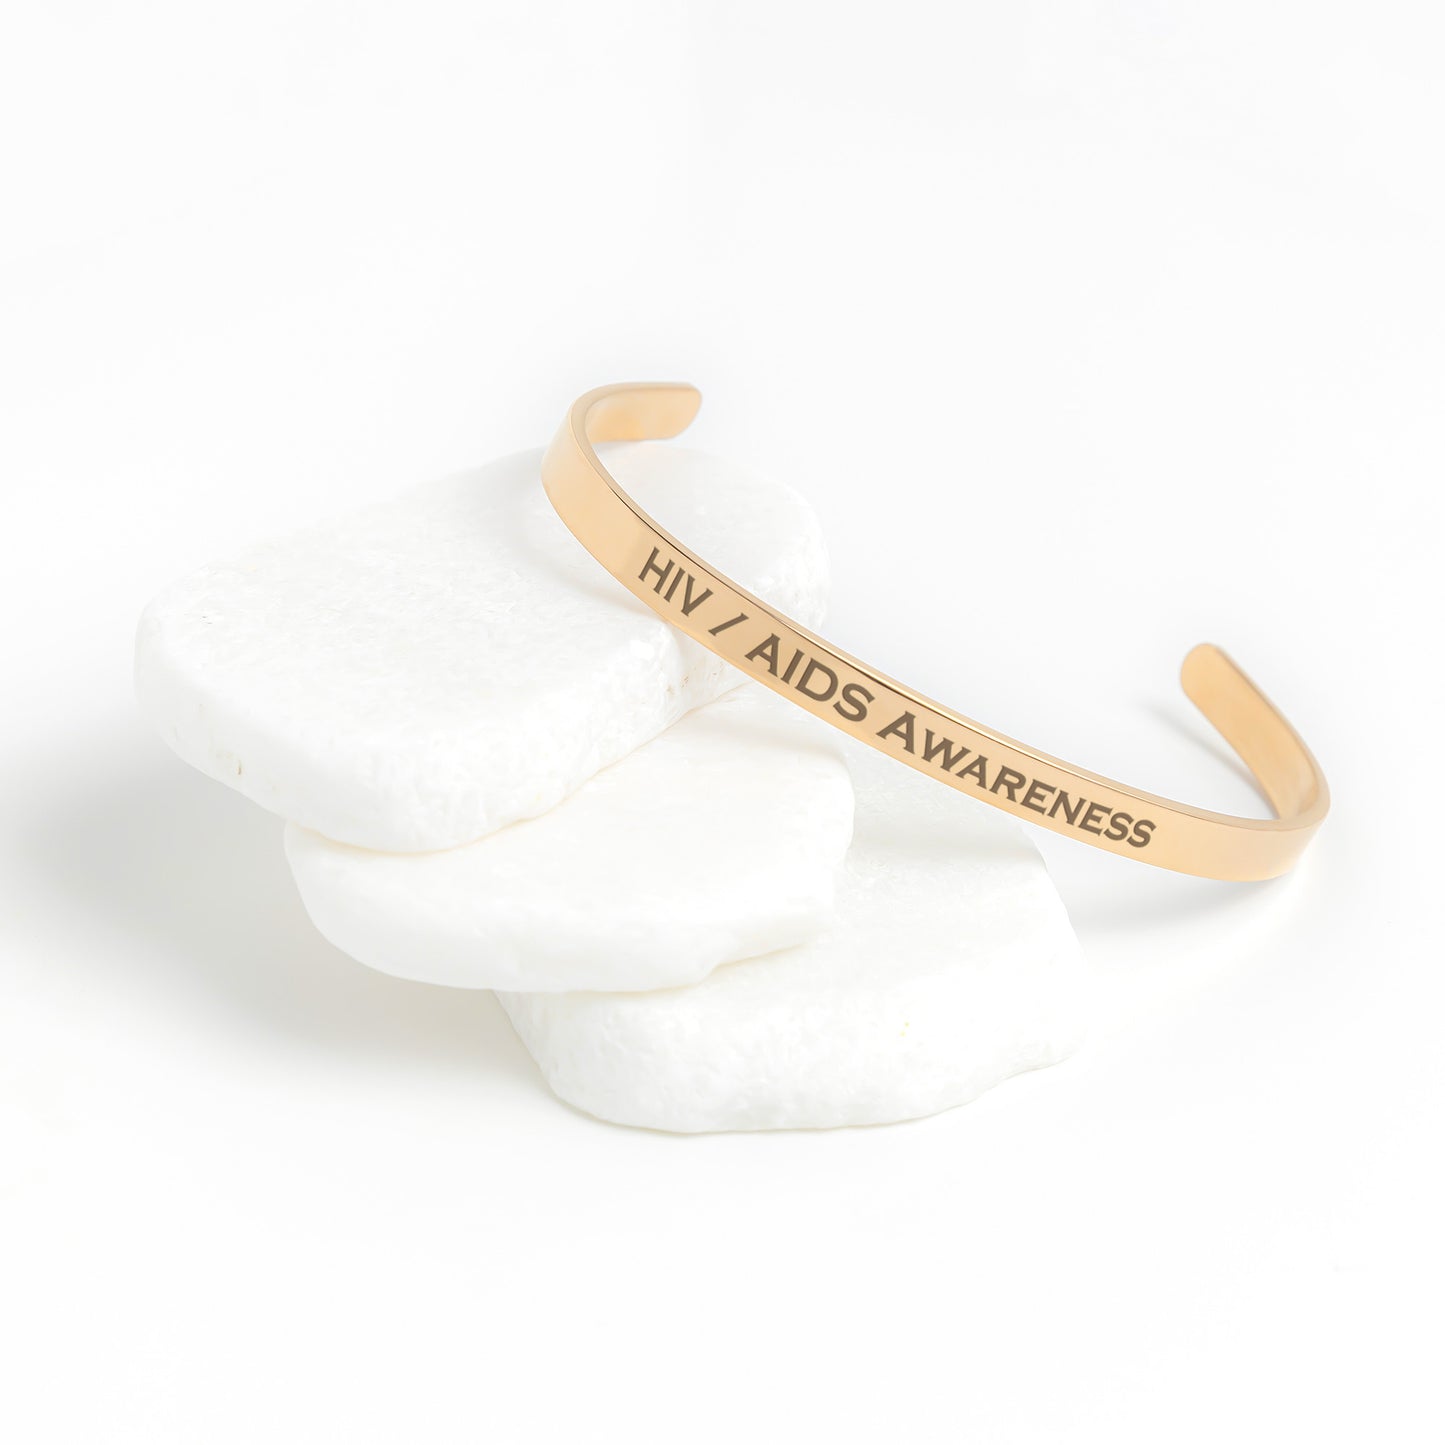 Personalized HIV / AIDS Awareness Cuff Bracelet